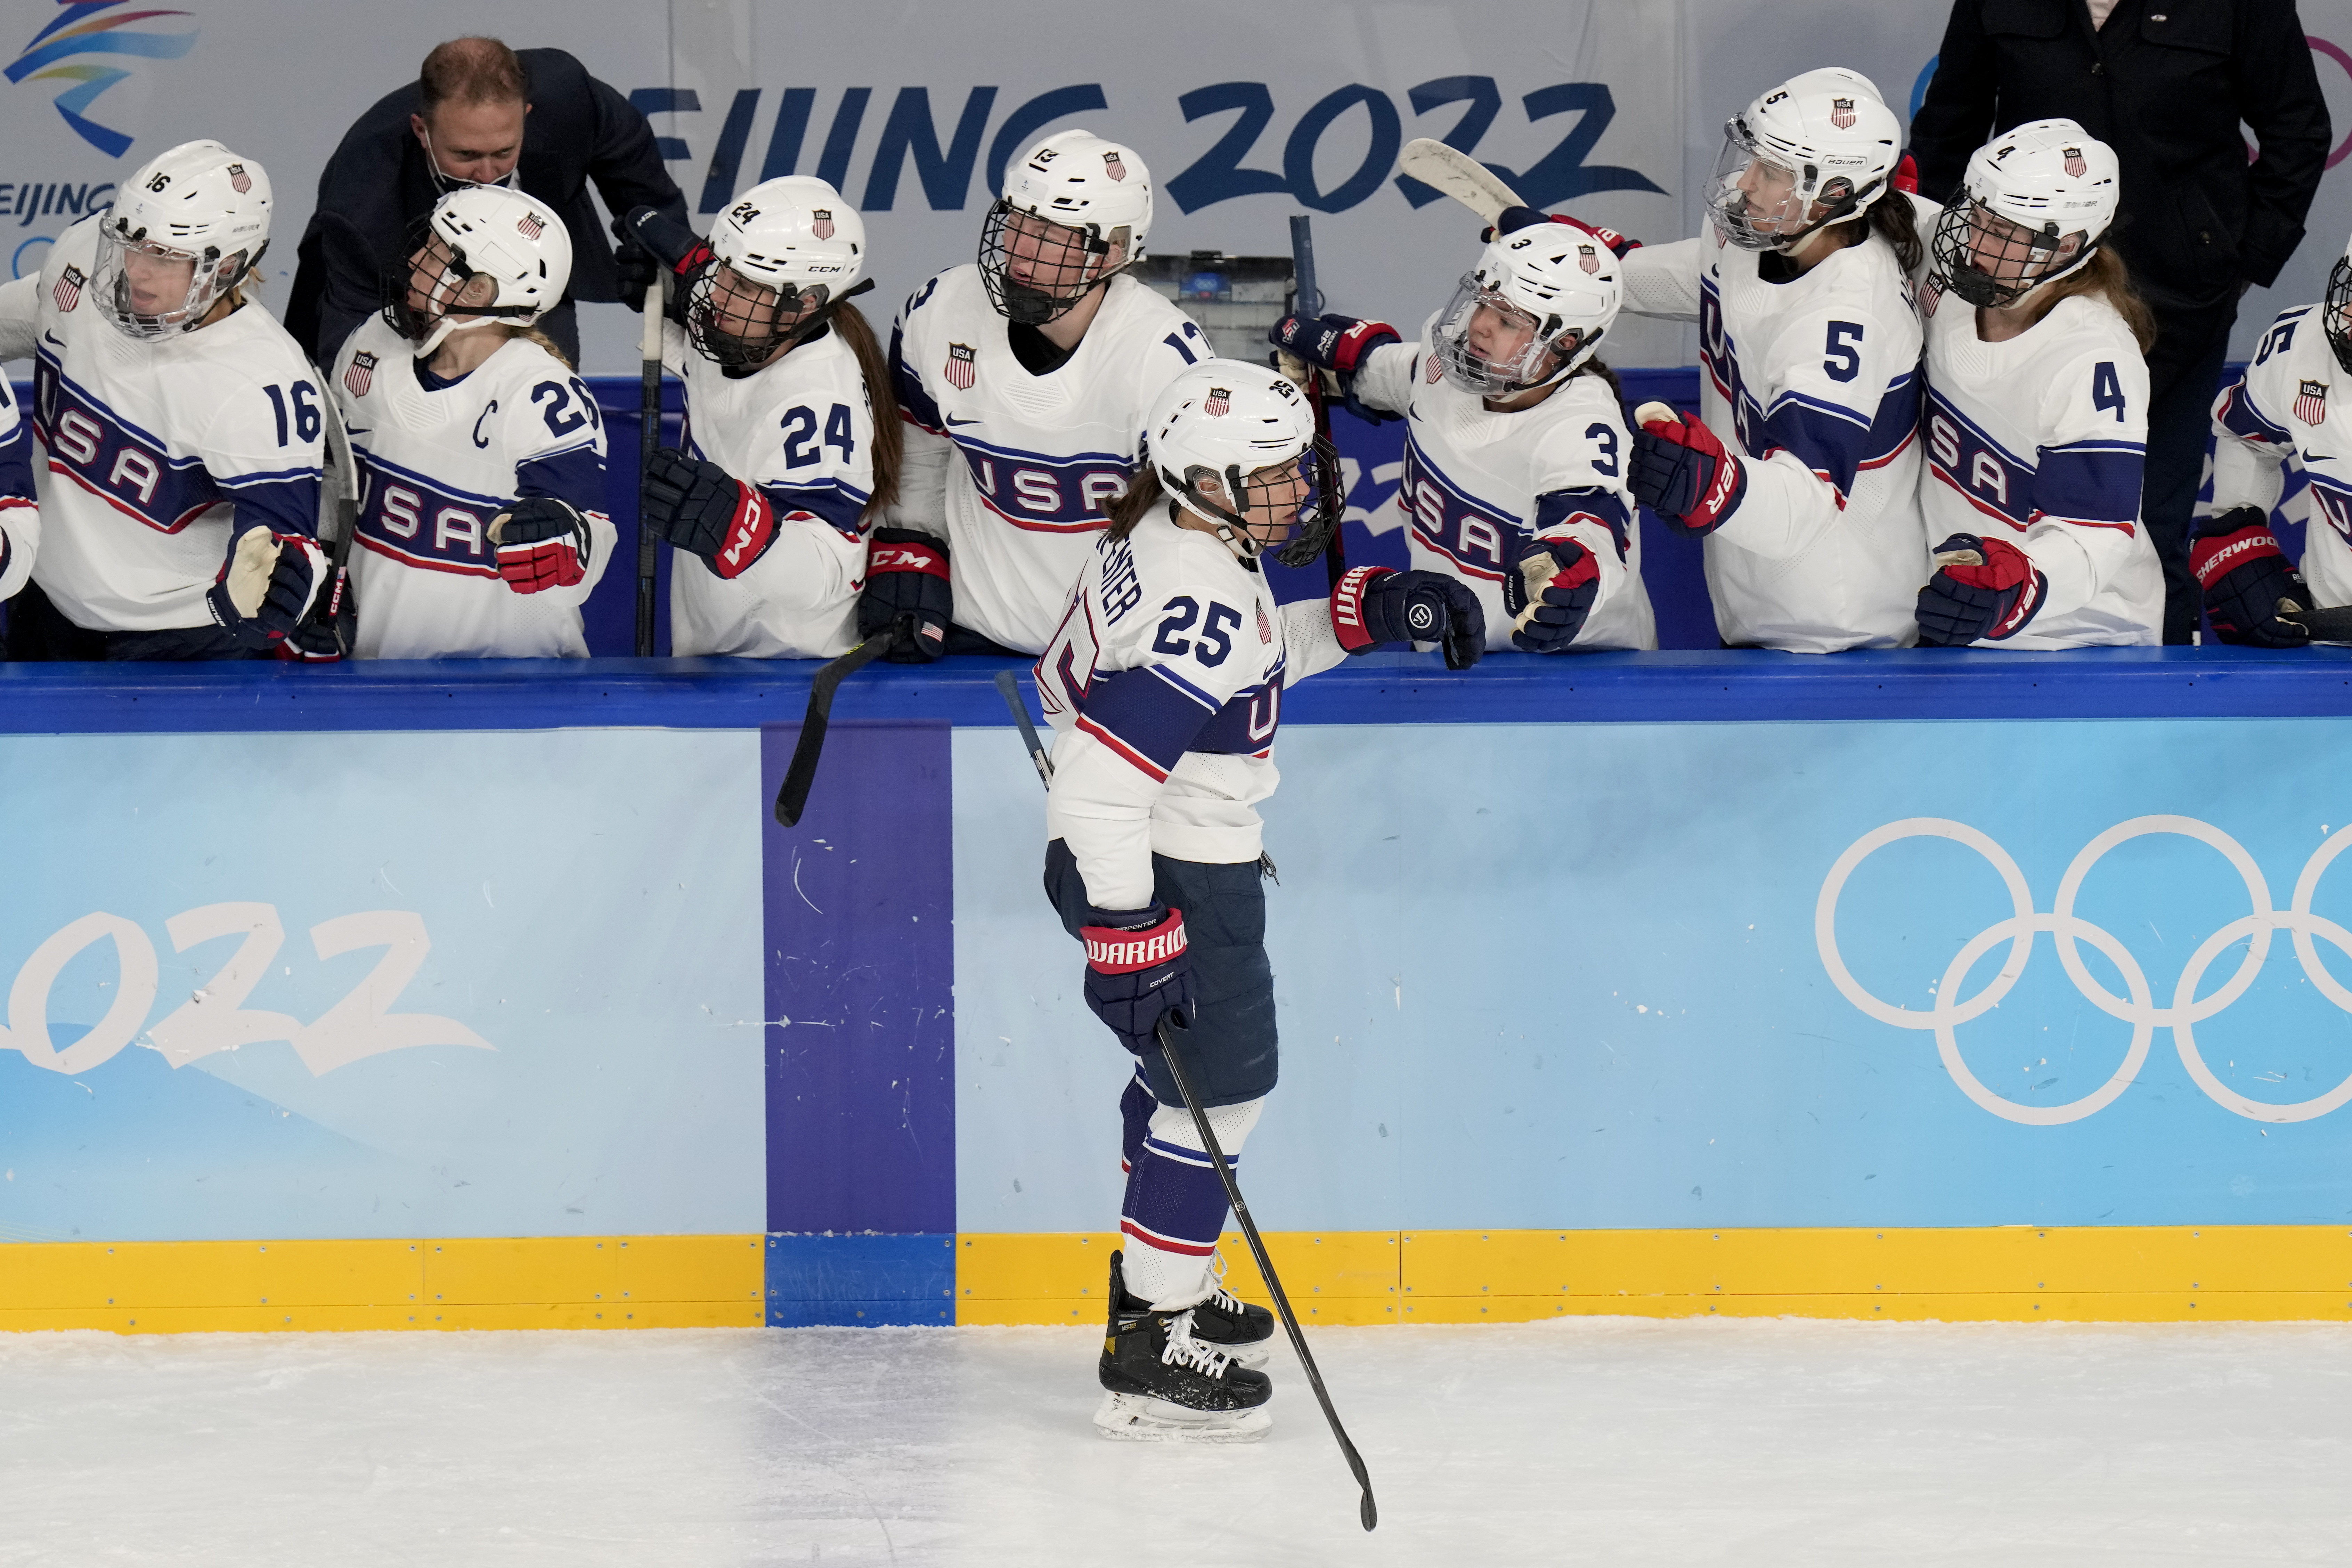 The Finnish National Ice Hockey Team Beats Switzerland for Bronze